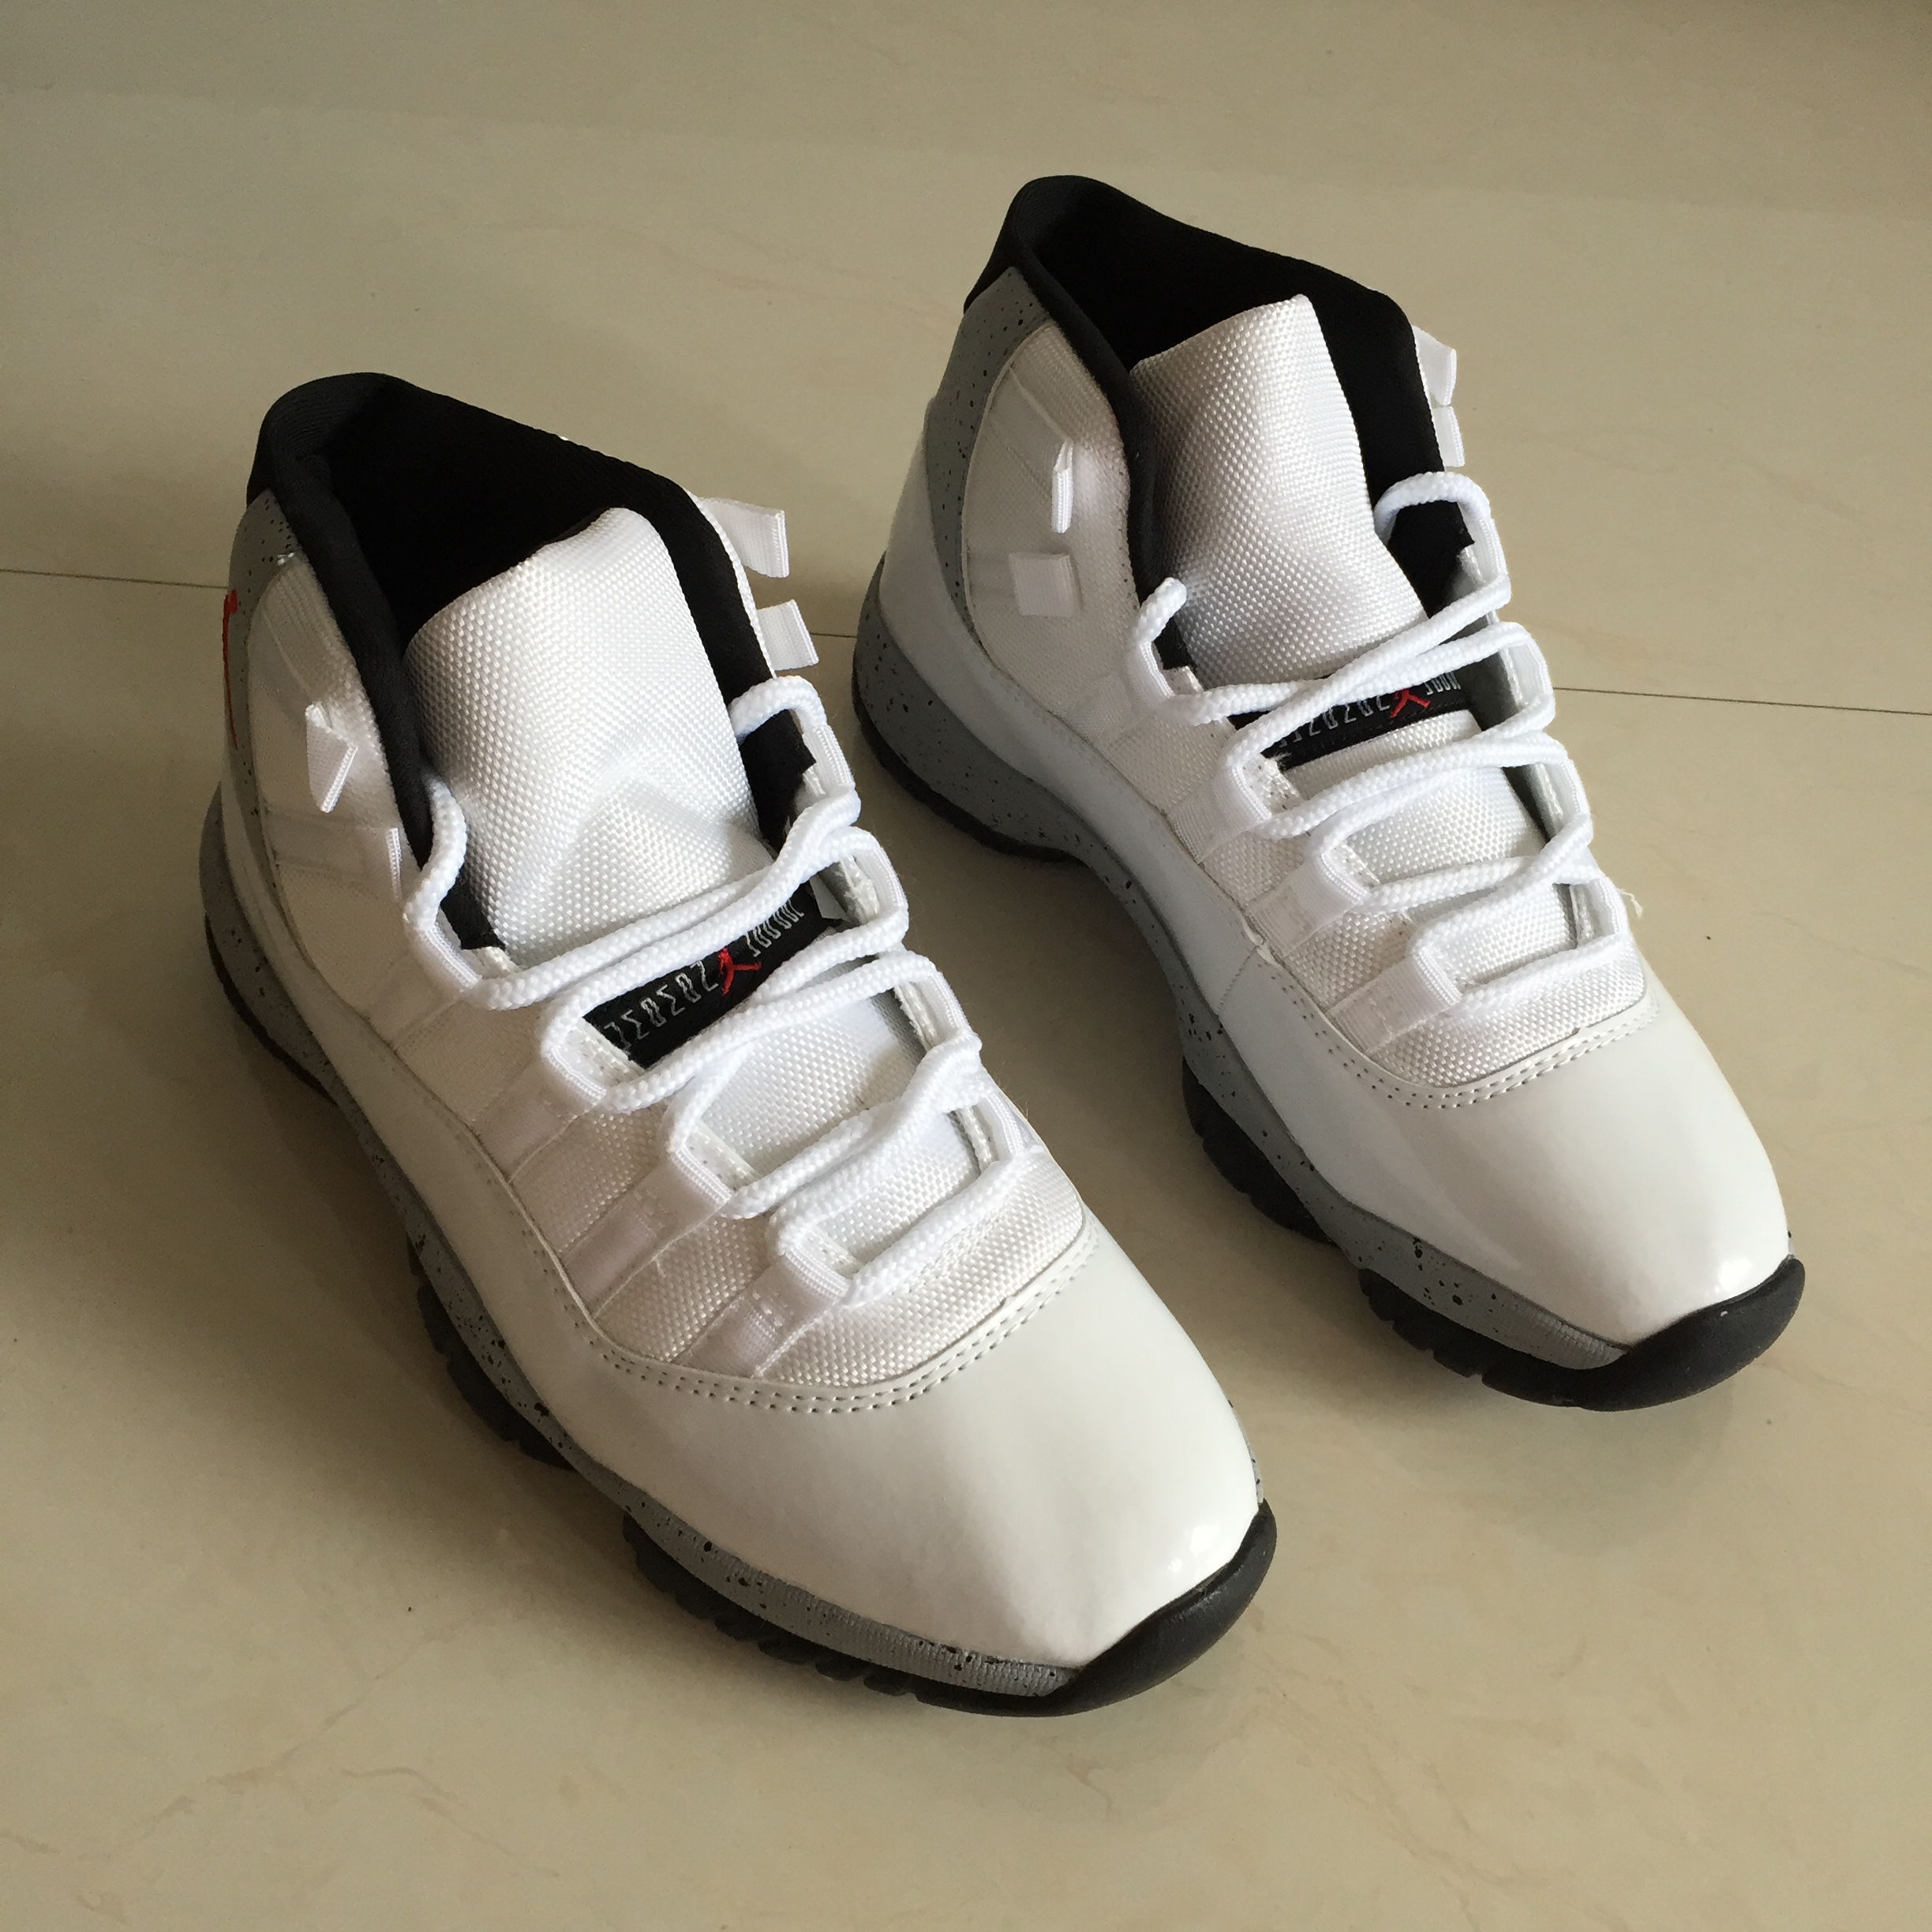 New Air Jordan 11 Retro White Grey Point Black